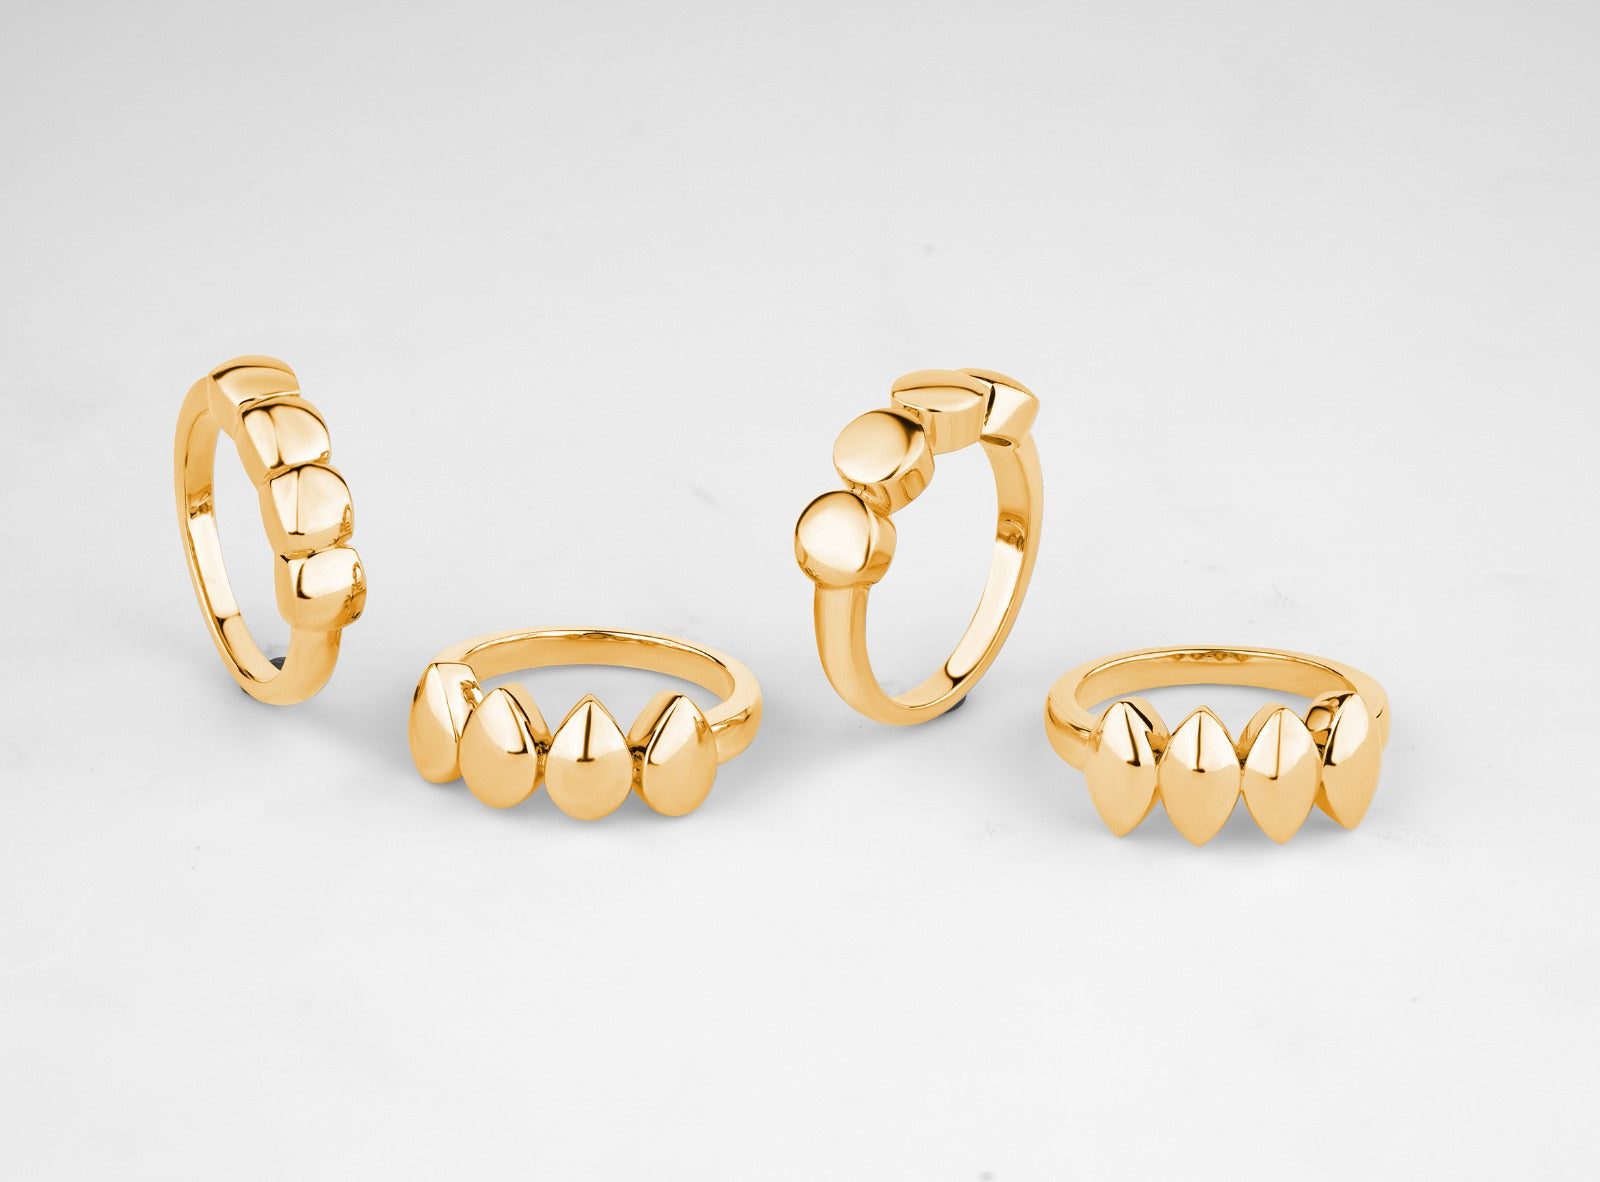 Premium Gold Vermeil Rings Manufacturer & Wholesaler